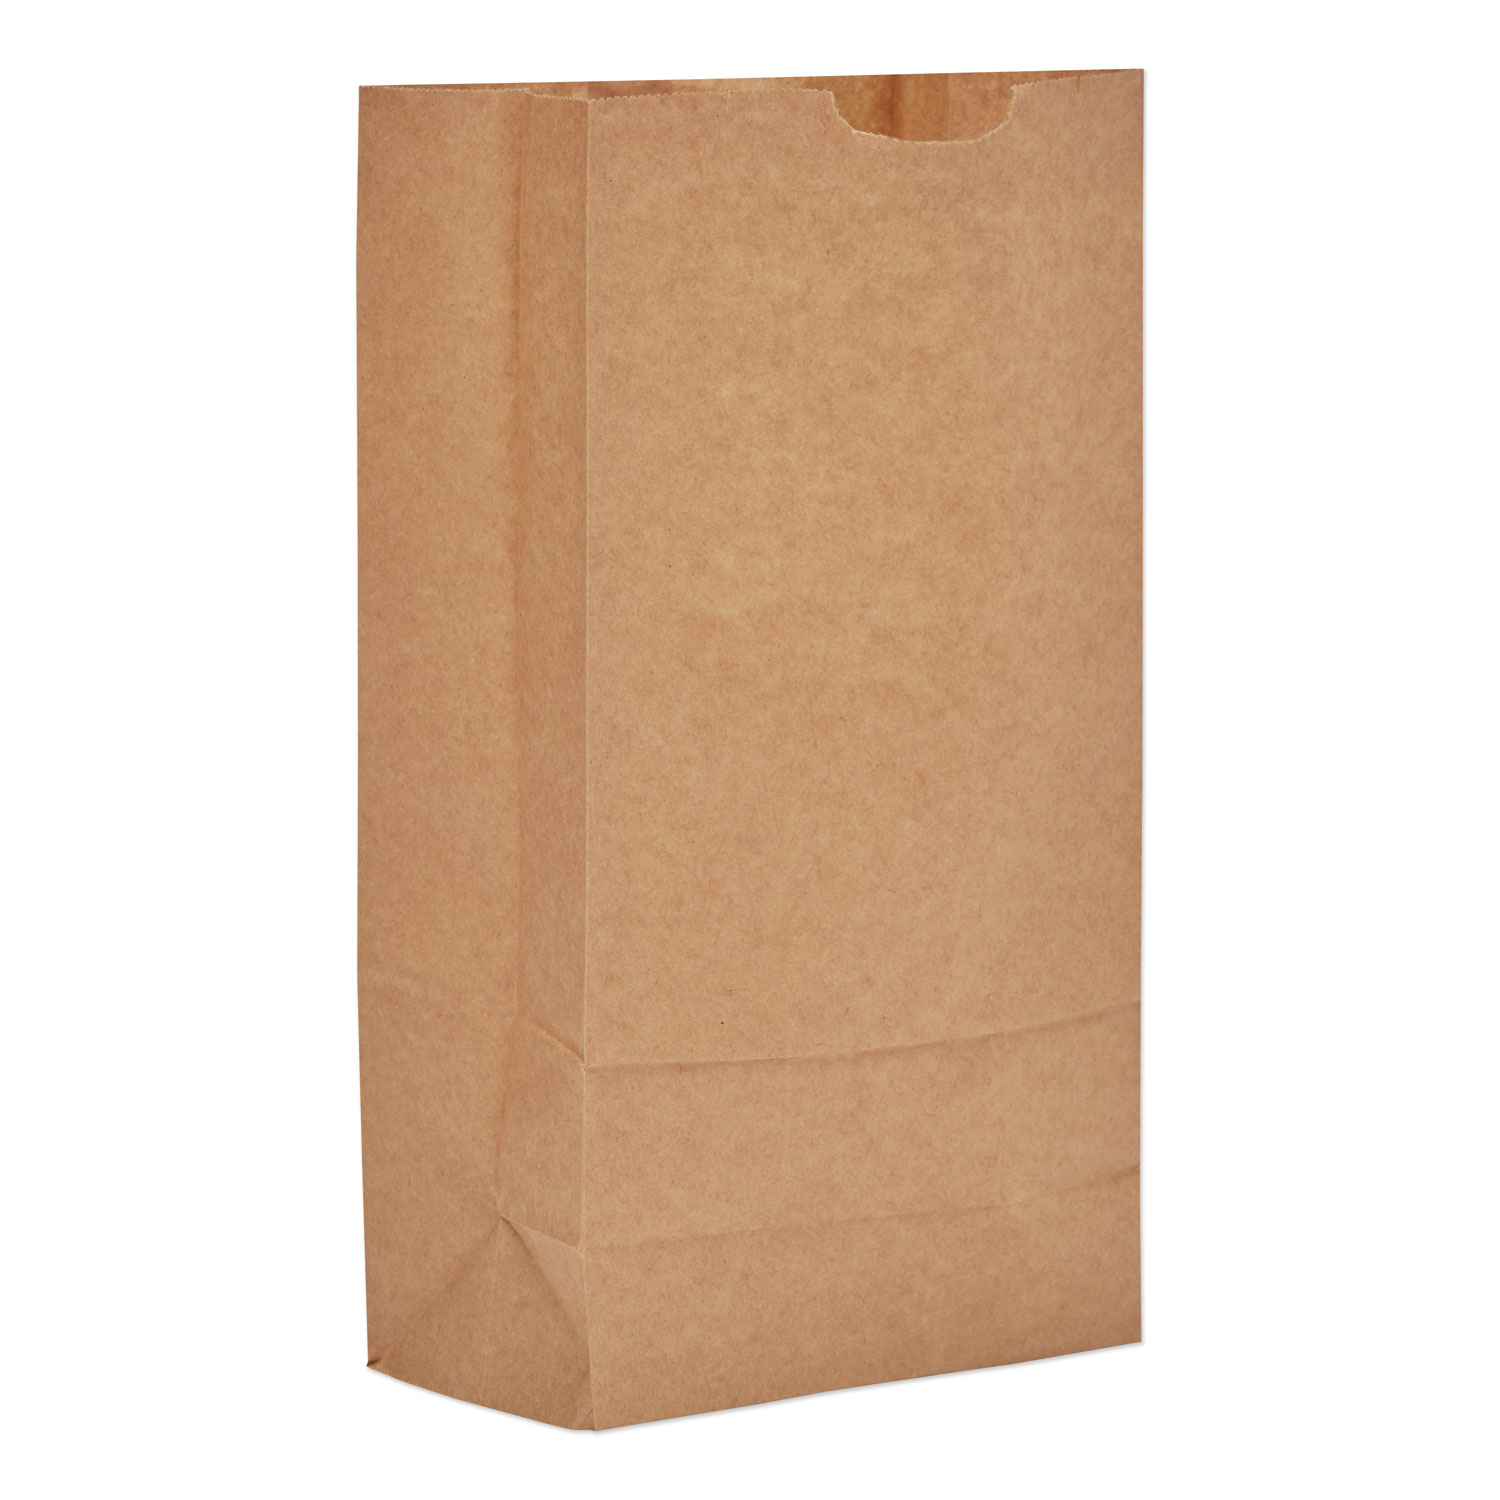  General 30910 Grocery Paper Bags, 57 lbs Capacity, #10, 6.31w x 4.19d x 13.38h, Kraft, 500 Bags (BAGGX10500) 